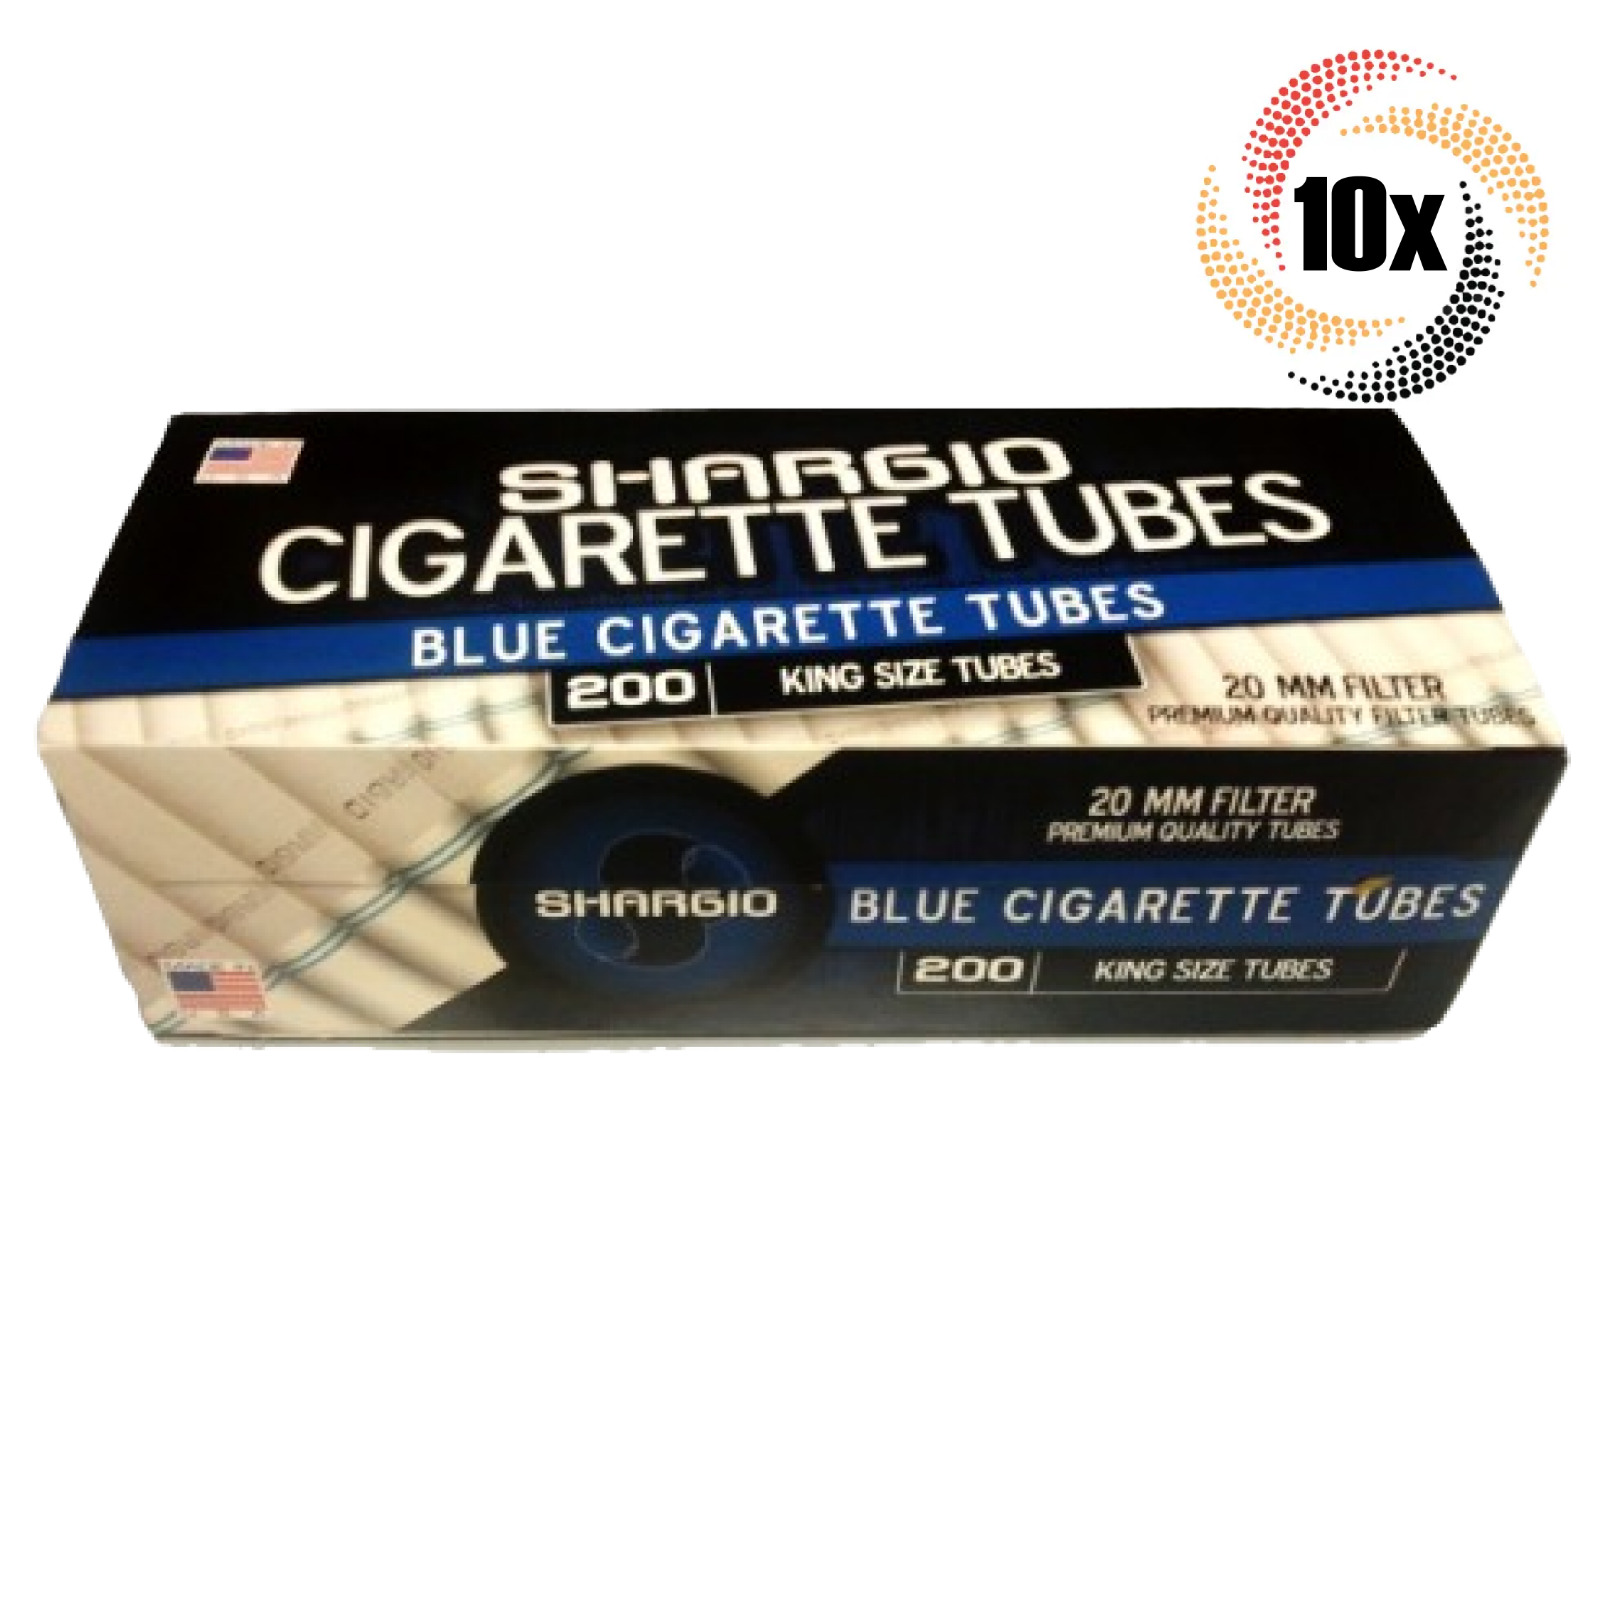 10x Boxes Shargio Blue Light King Size ( 2,000 Tubes ) Cigarette Tobacco RYO